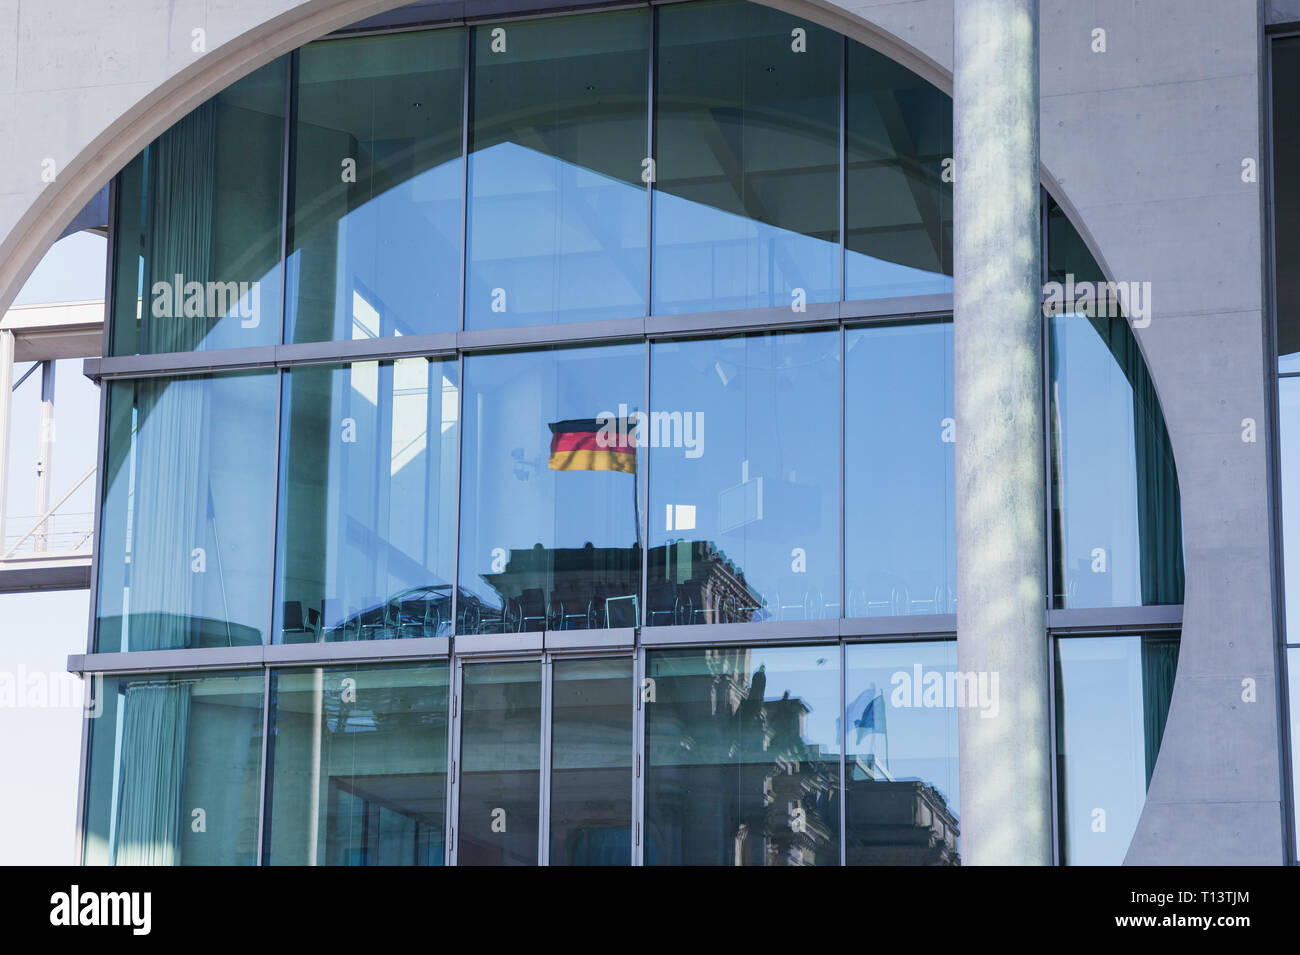 Germania, Berlino, Regierungsviertel, riflesso del palazzo del Reichstag e la bandiera tedesca in Marie-Elisabeth-Lueders-Building, mirroring in facciata di vetro Foto Stock